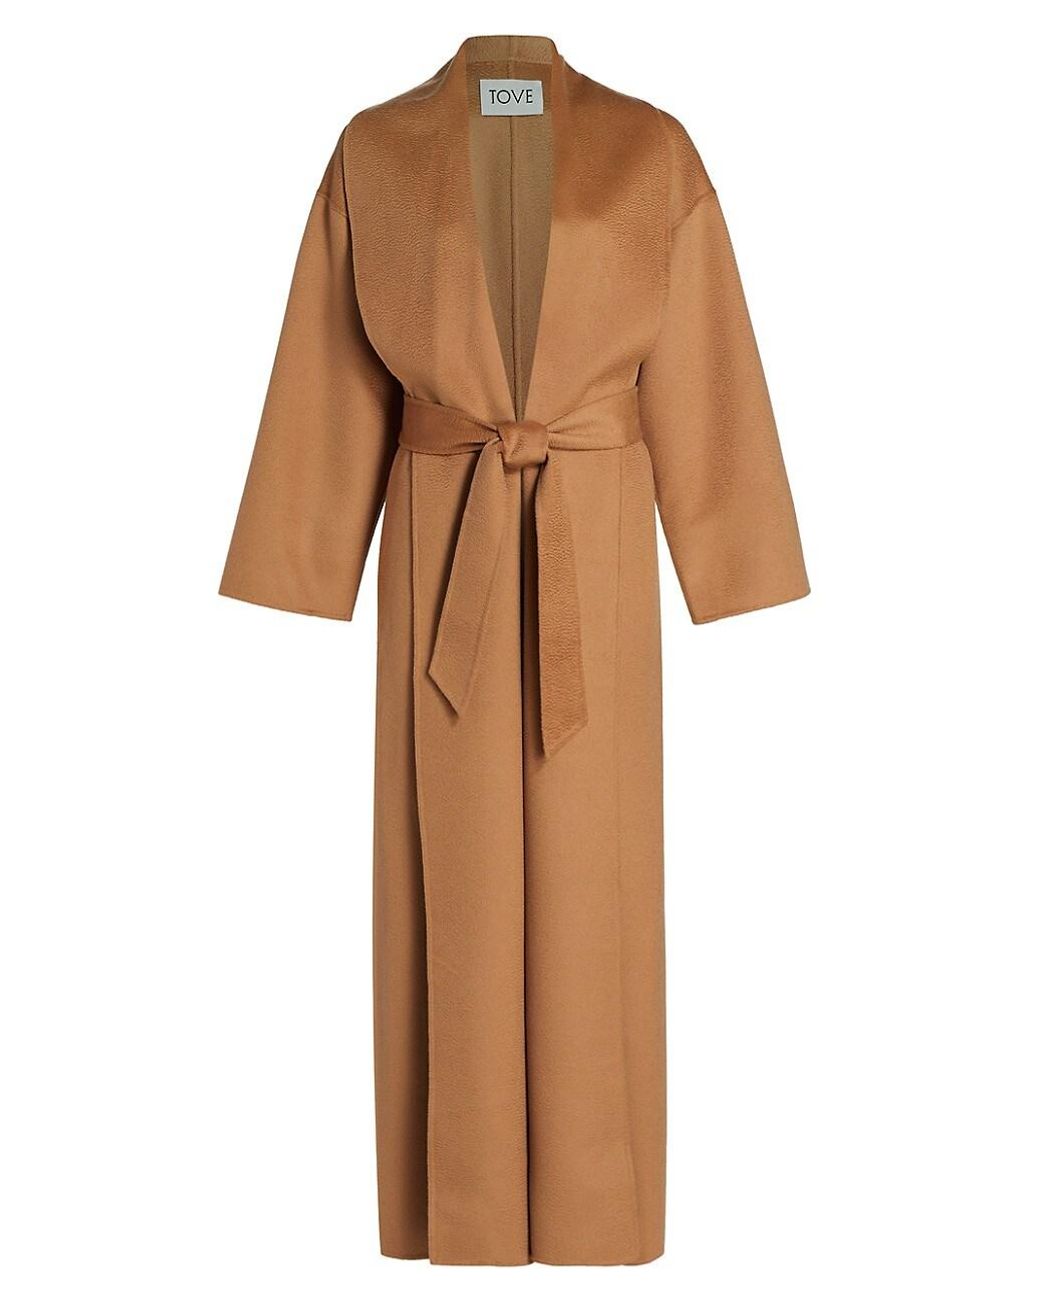 TOVE Synthetic Joor Lambswool Maxi Coat in Camel (Brown) | Lyst